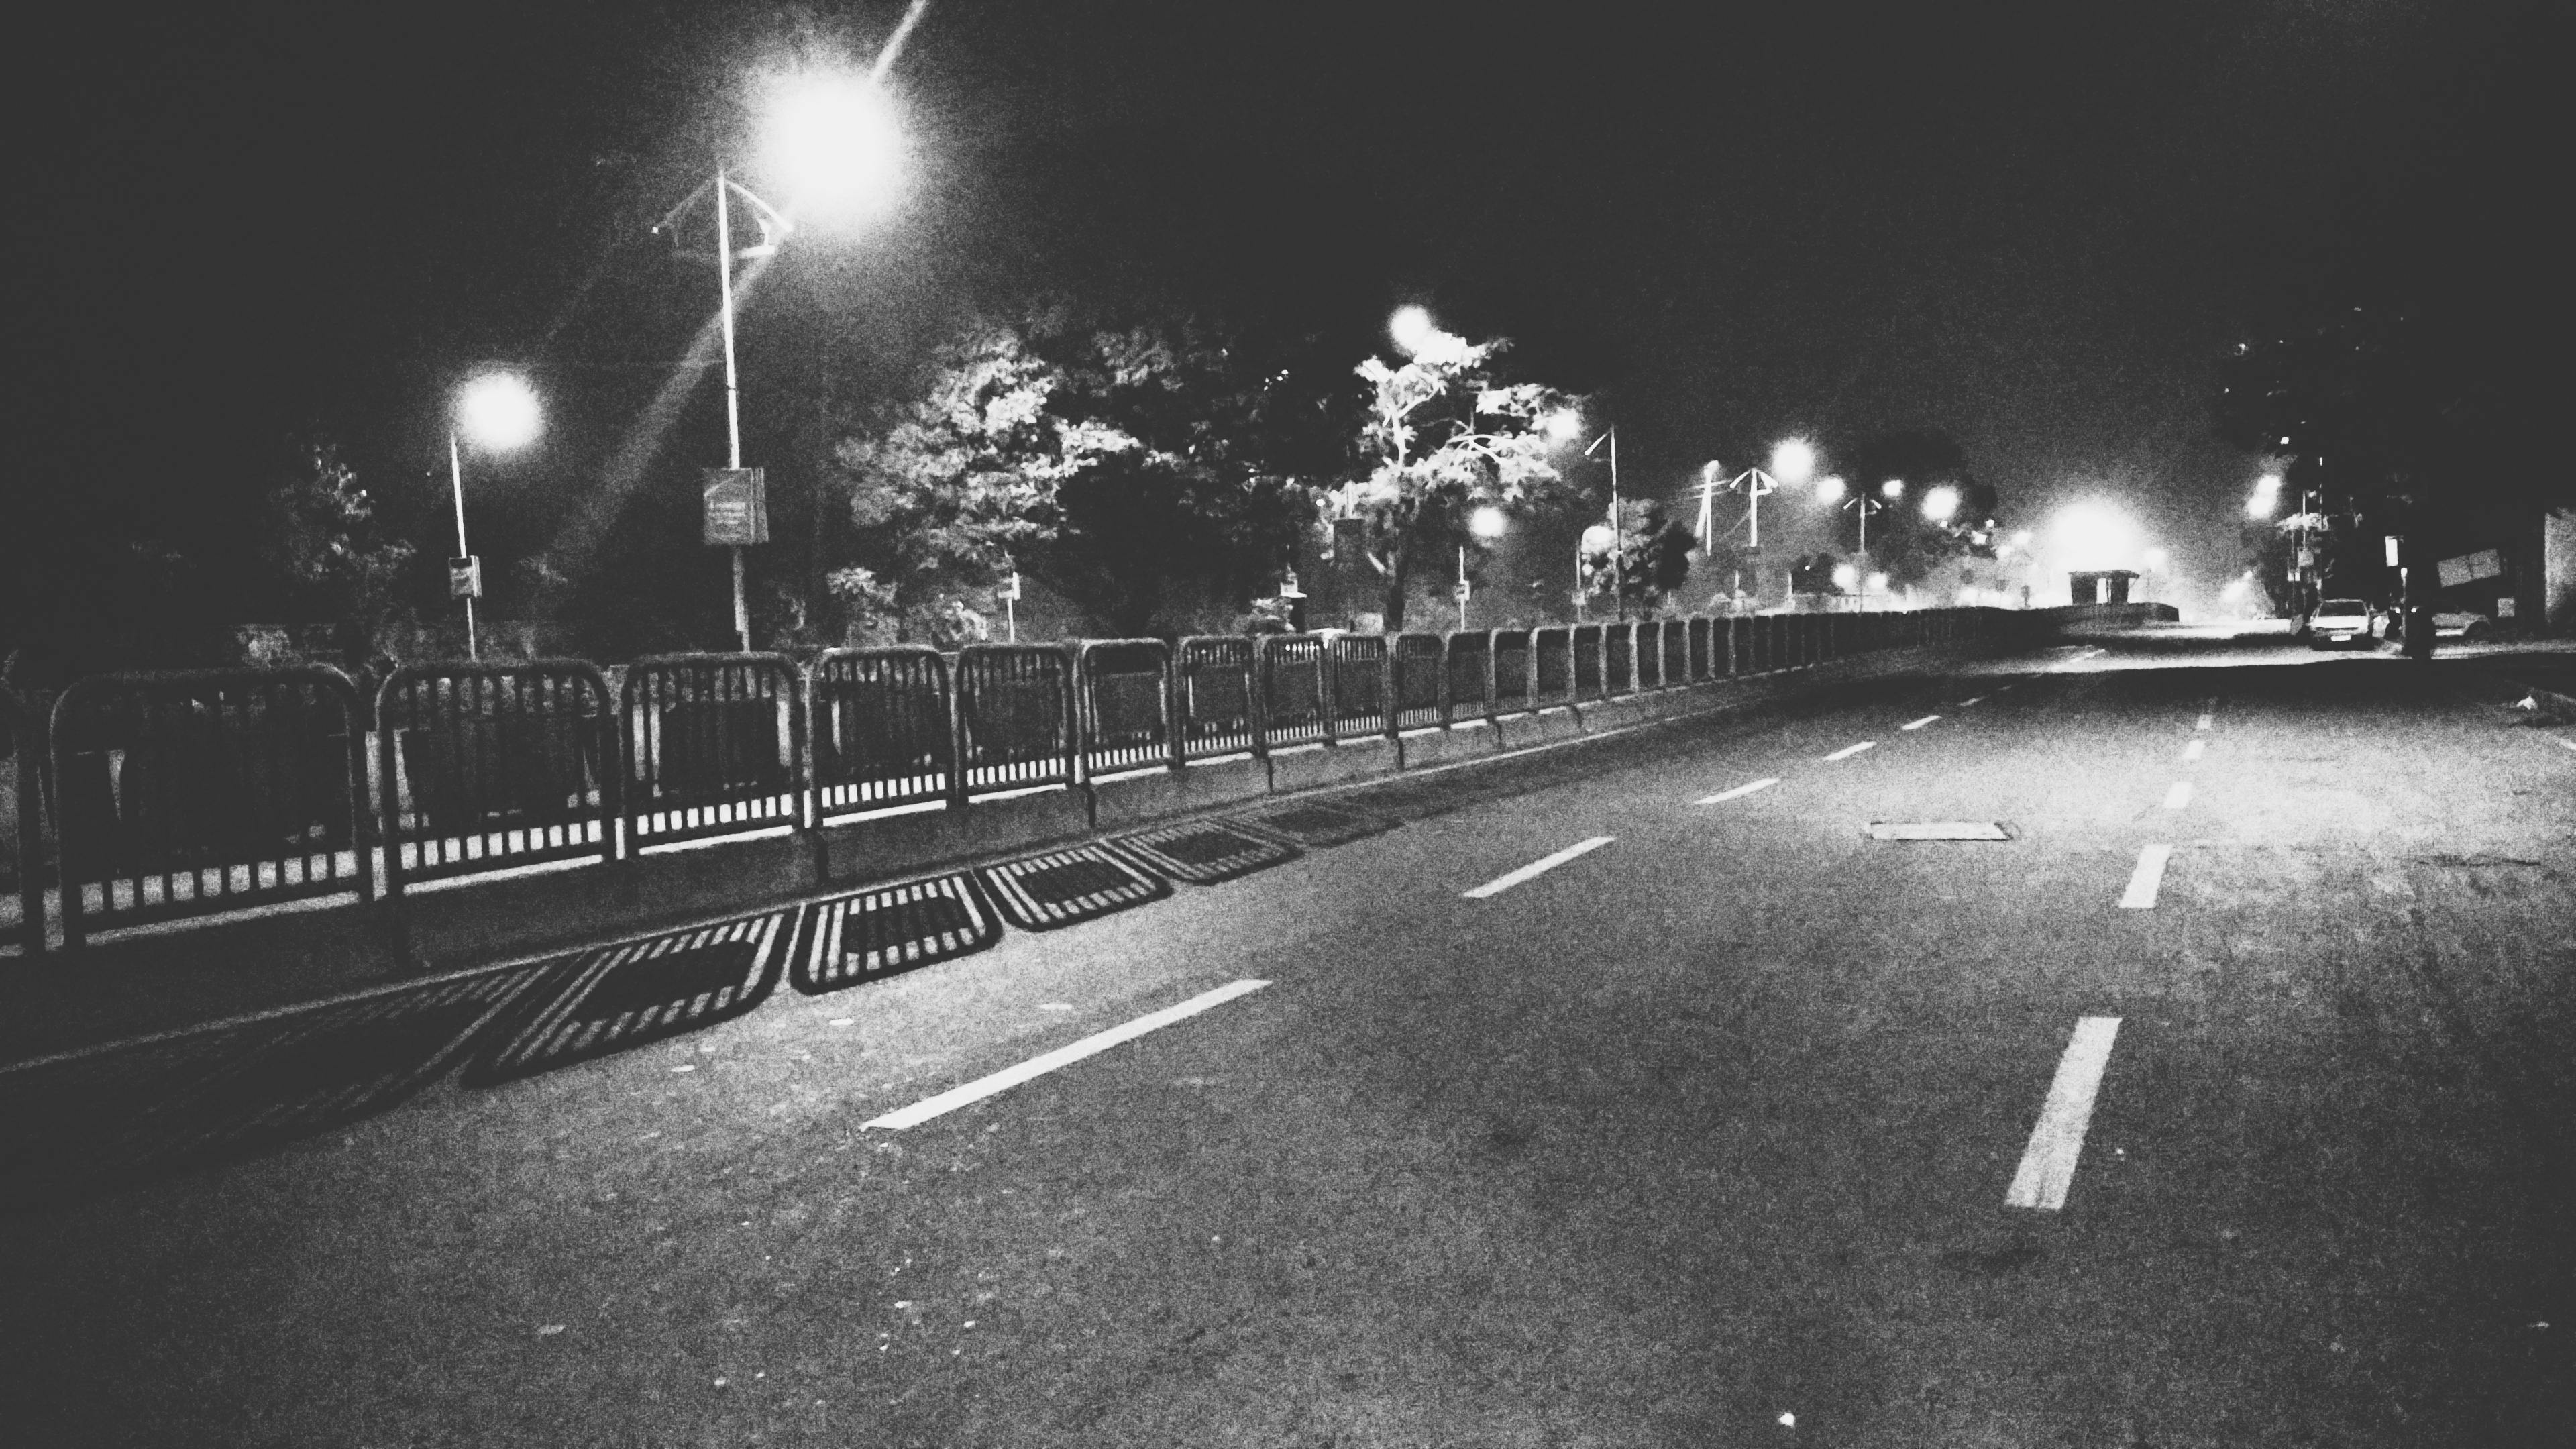 Free stock photo of #night #dark #shadow #road #silent #white #black